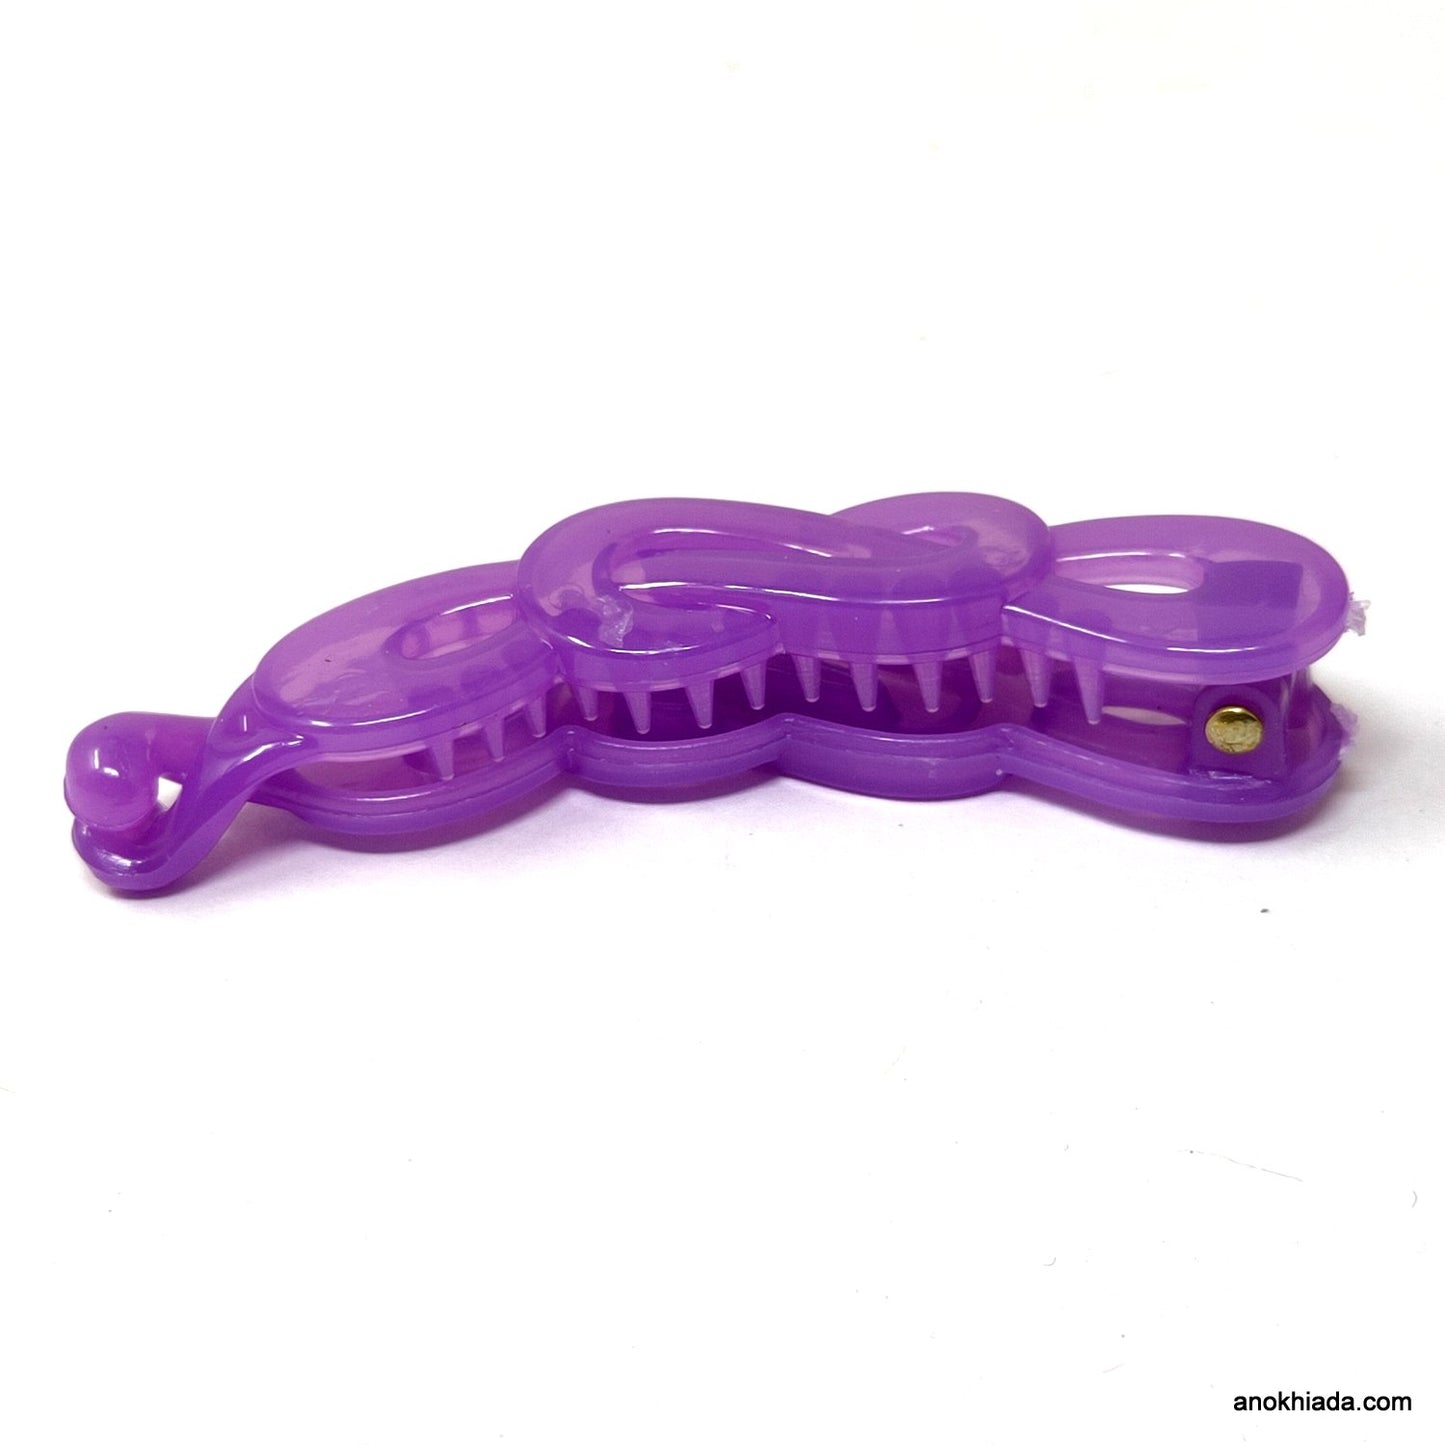 Translucent Infinity Design Small Purple Banana Hair Clip for Girls & Woman (98-14B Banana Hair Clips)